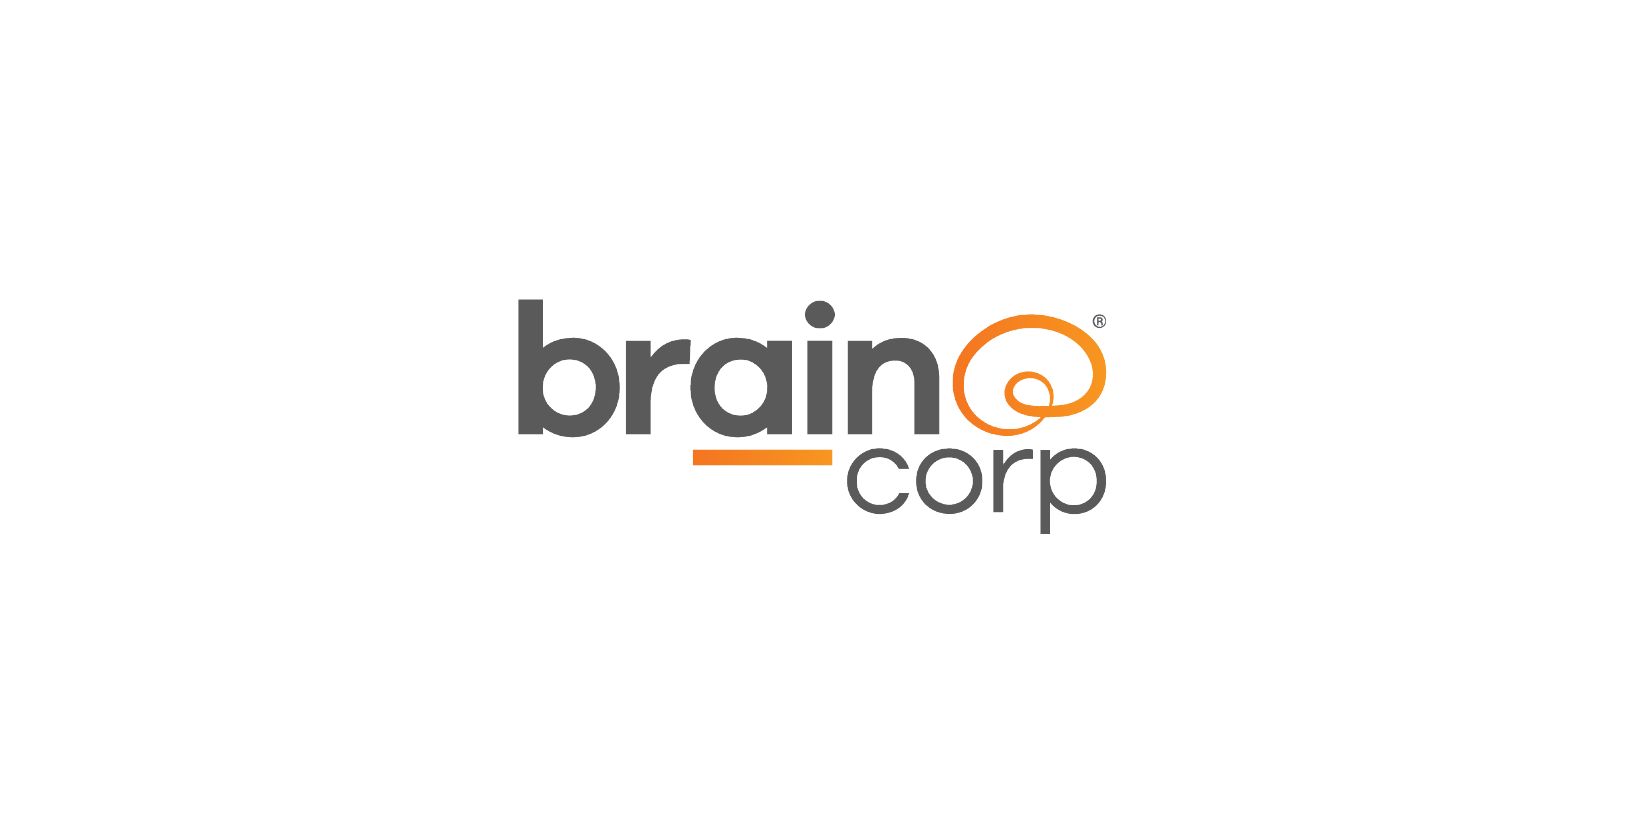 Vision Fund investment portfolio company Brain Corp's logo